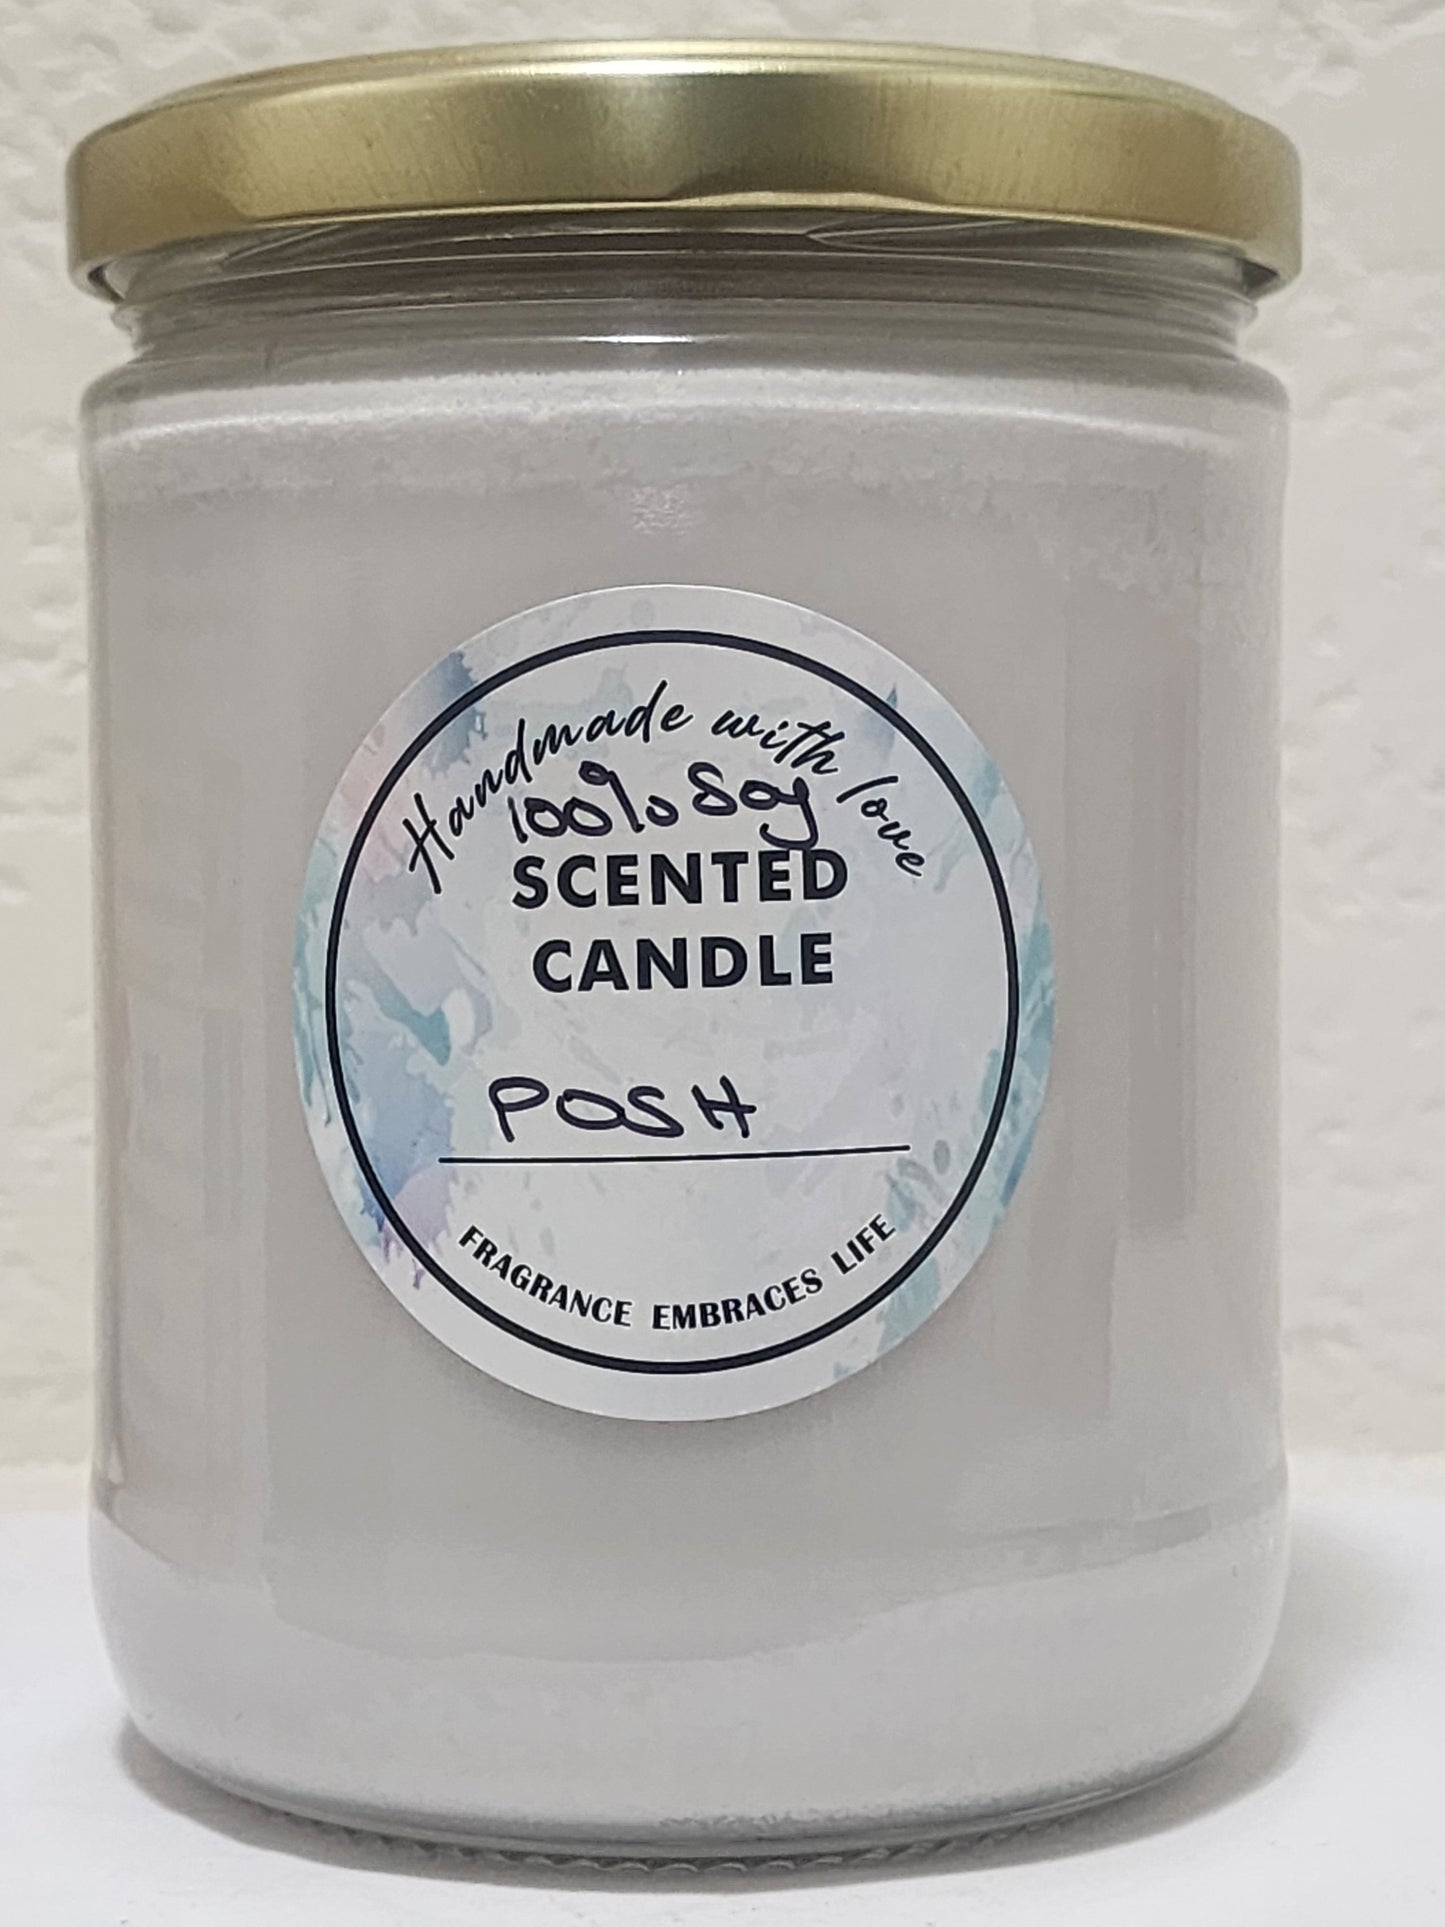 Posh 100% Soy Handmade Candle 16oz Jar